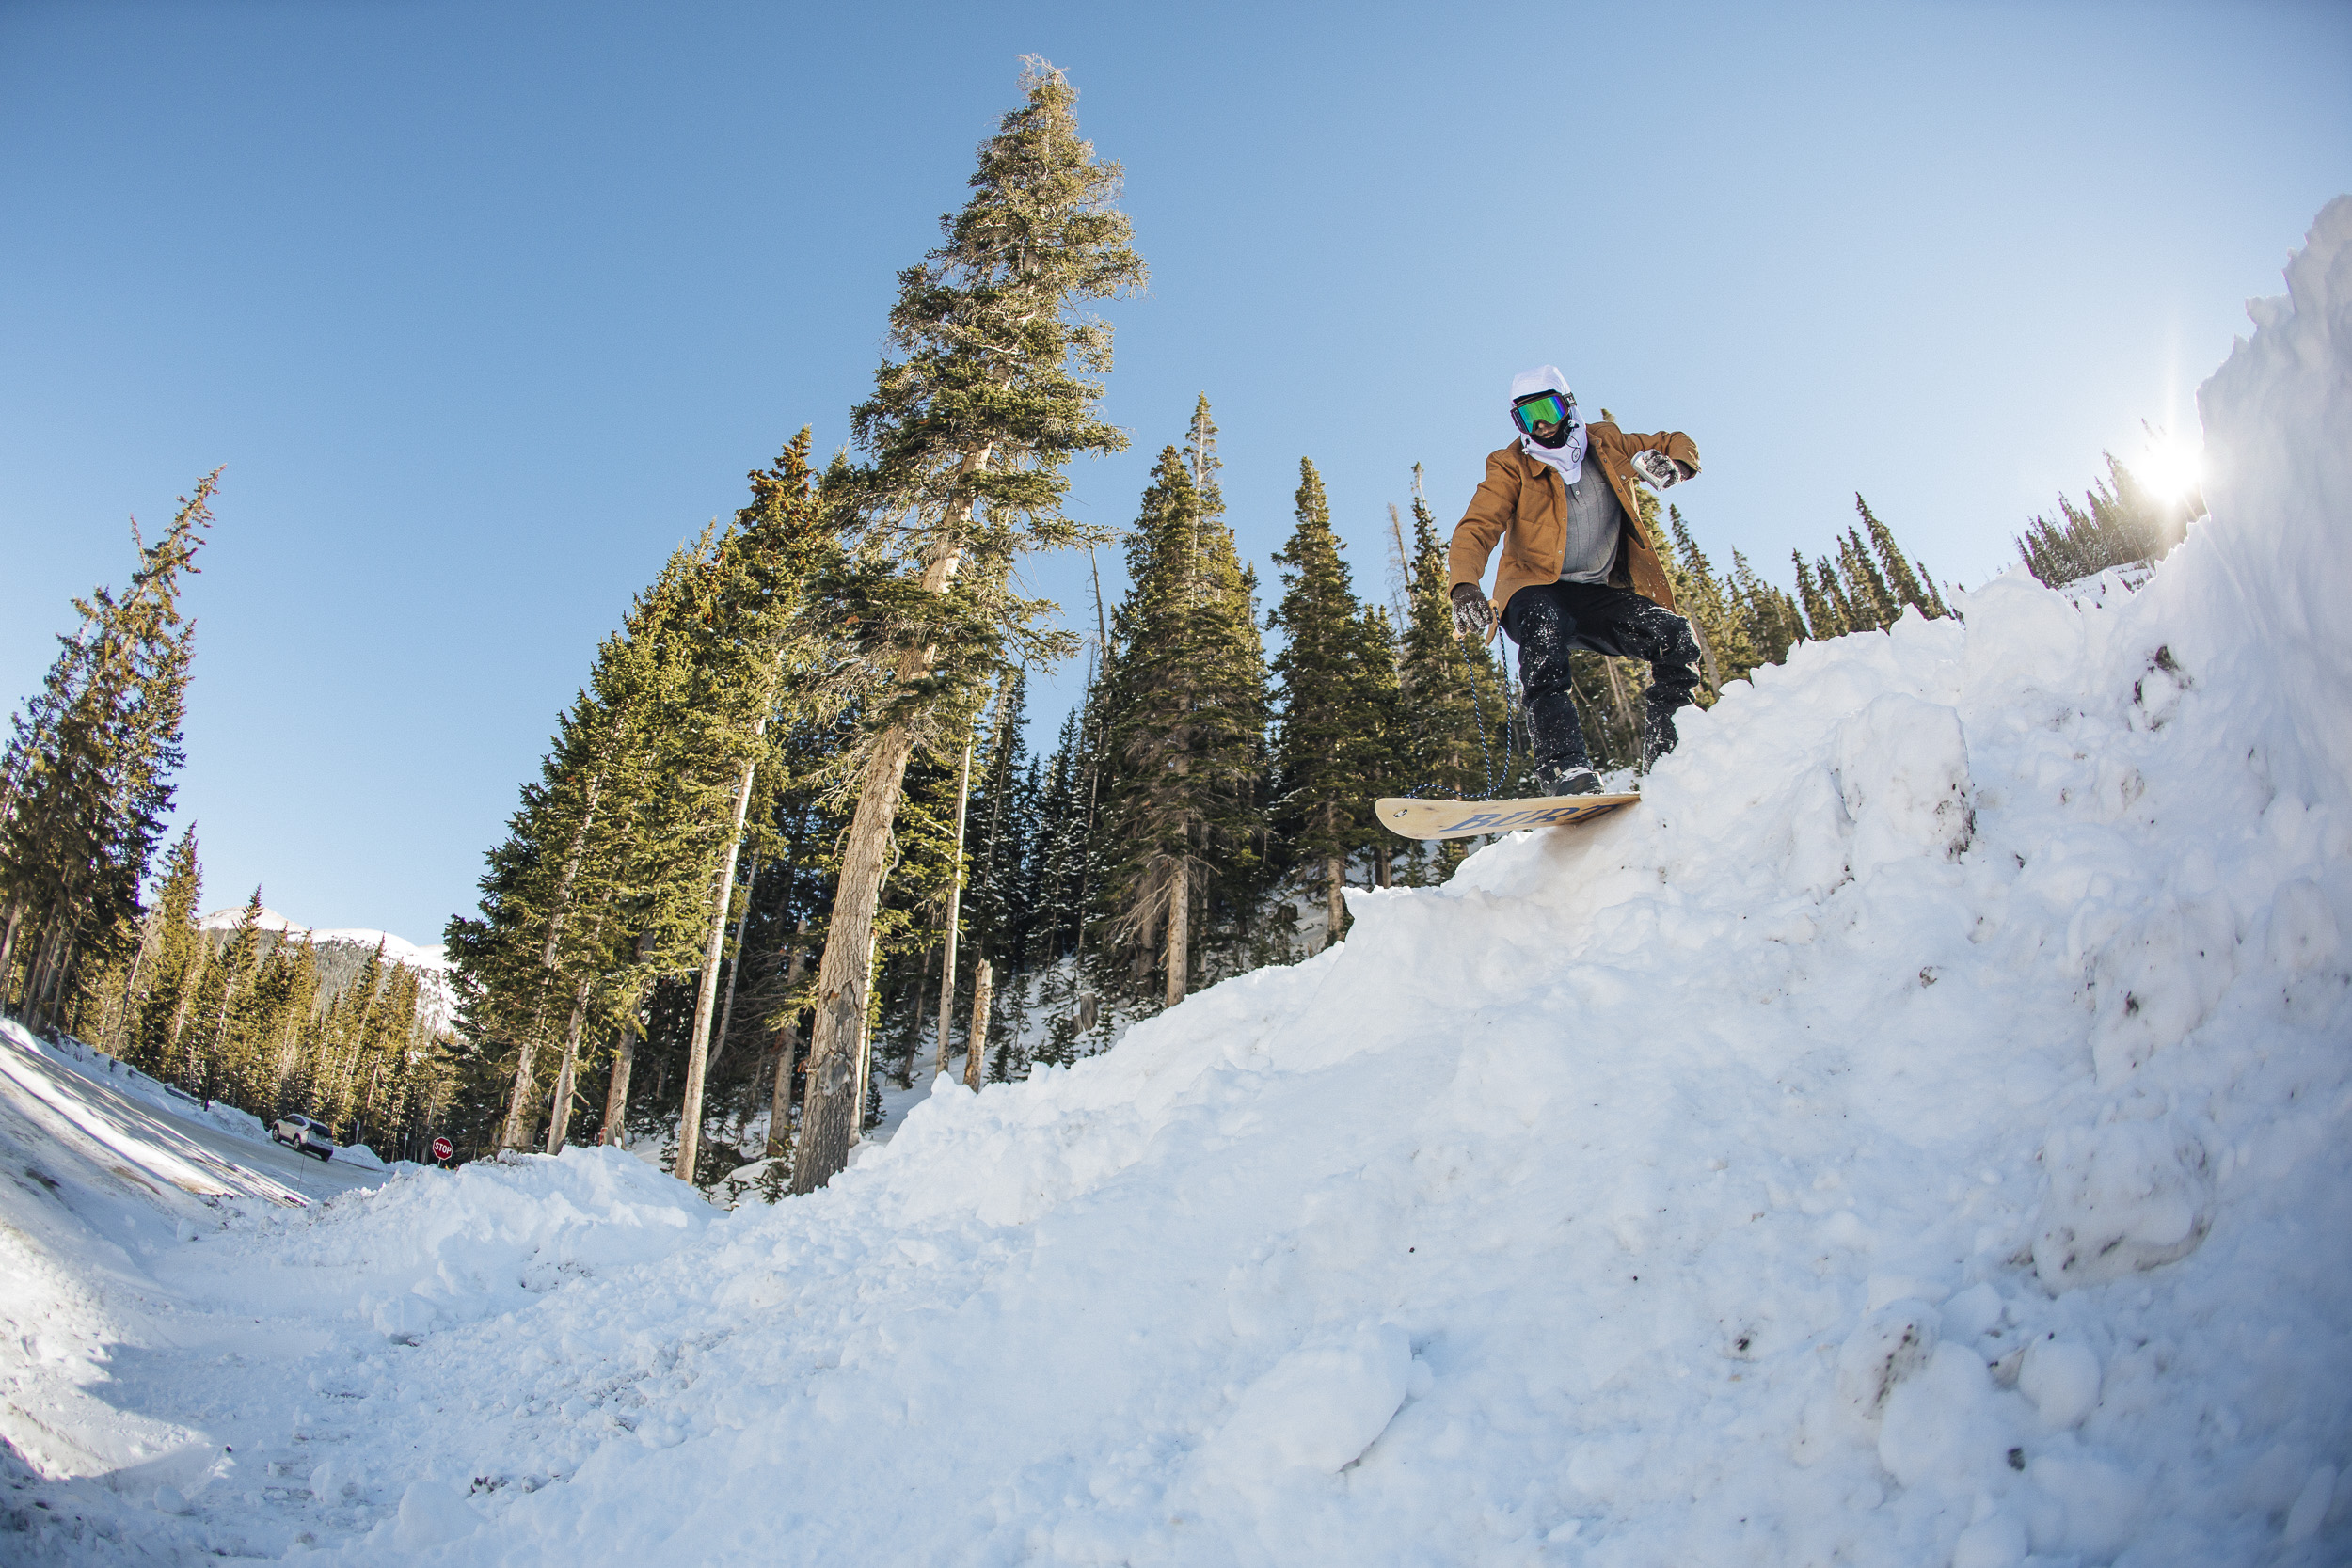 Burton Throwback Snowboard